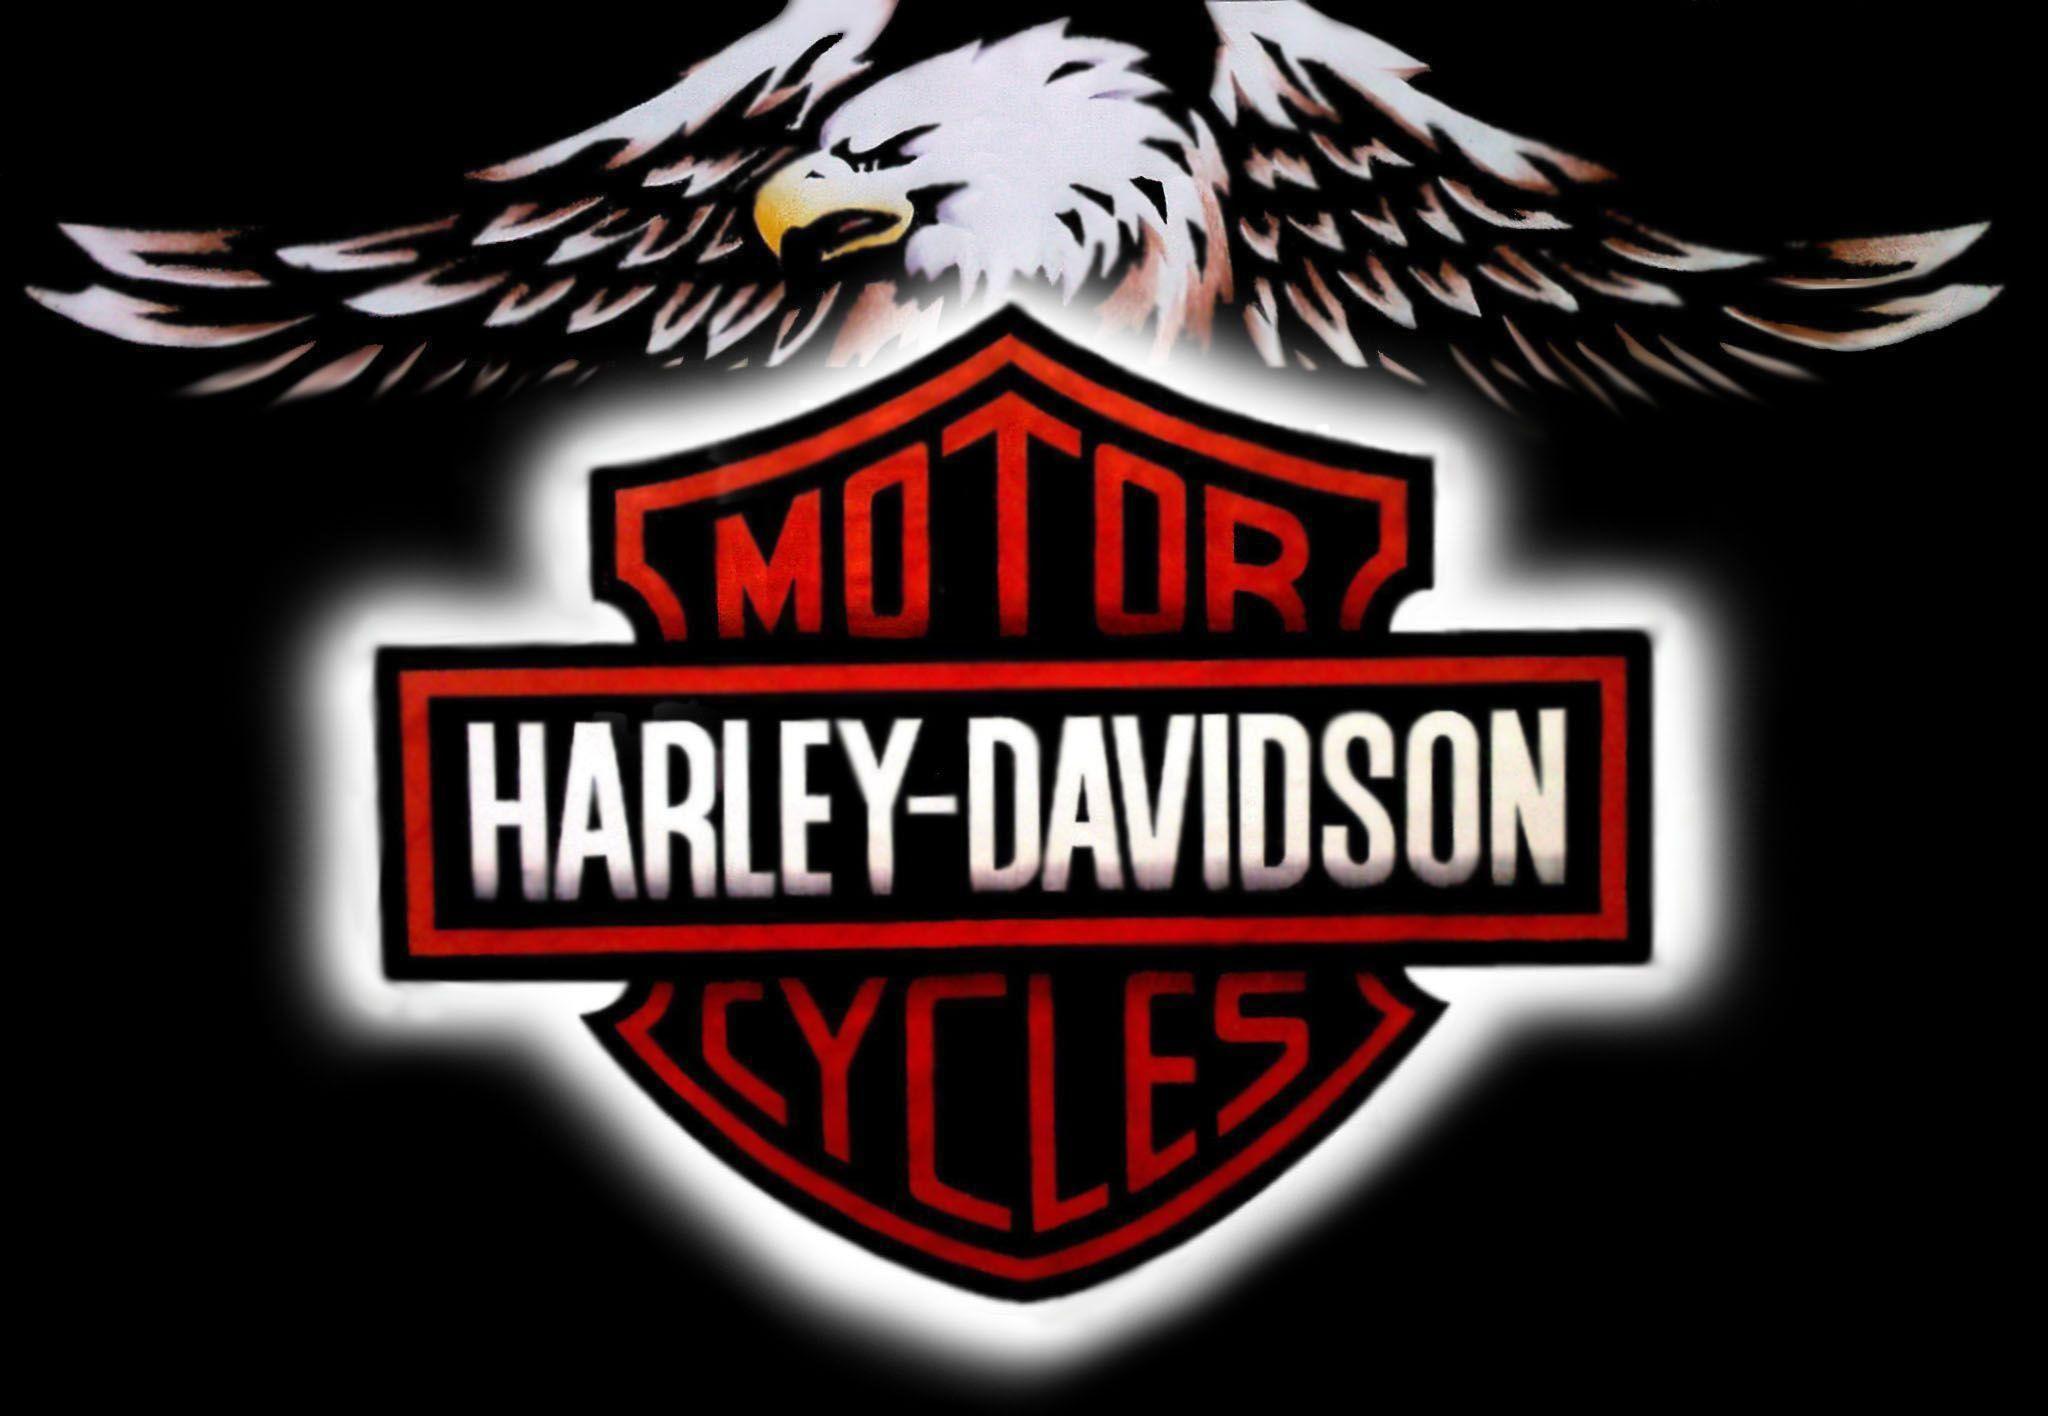 Harley Davidson Wallpaper Desk HD Picture. Top